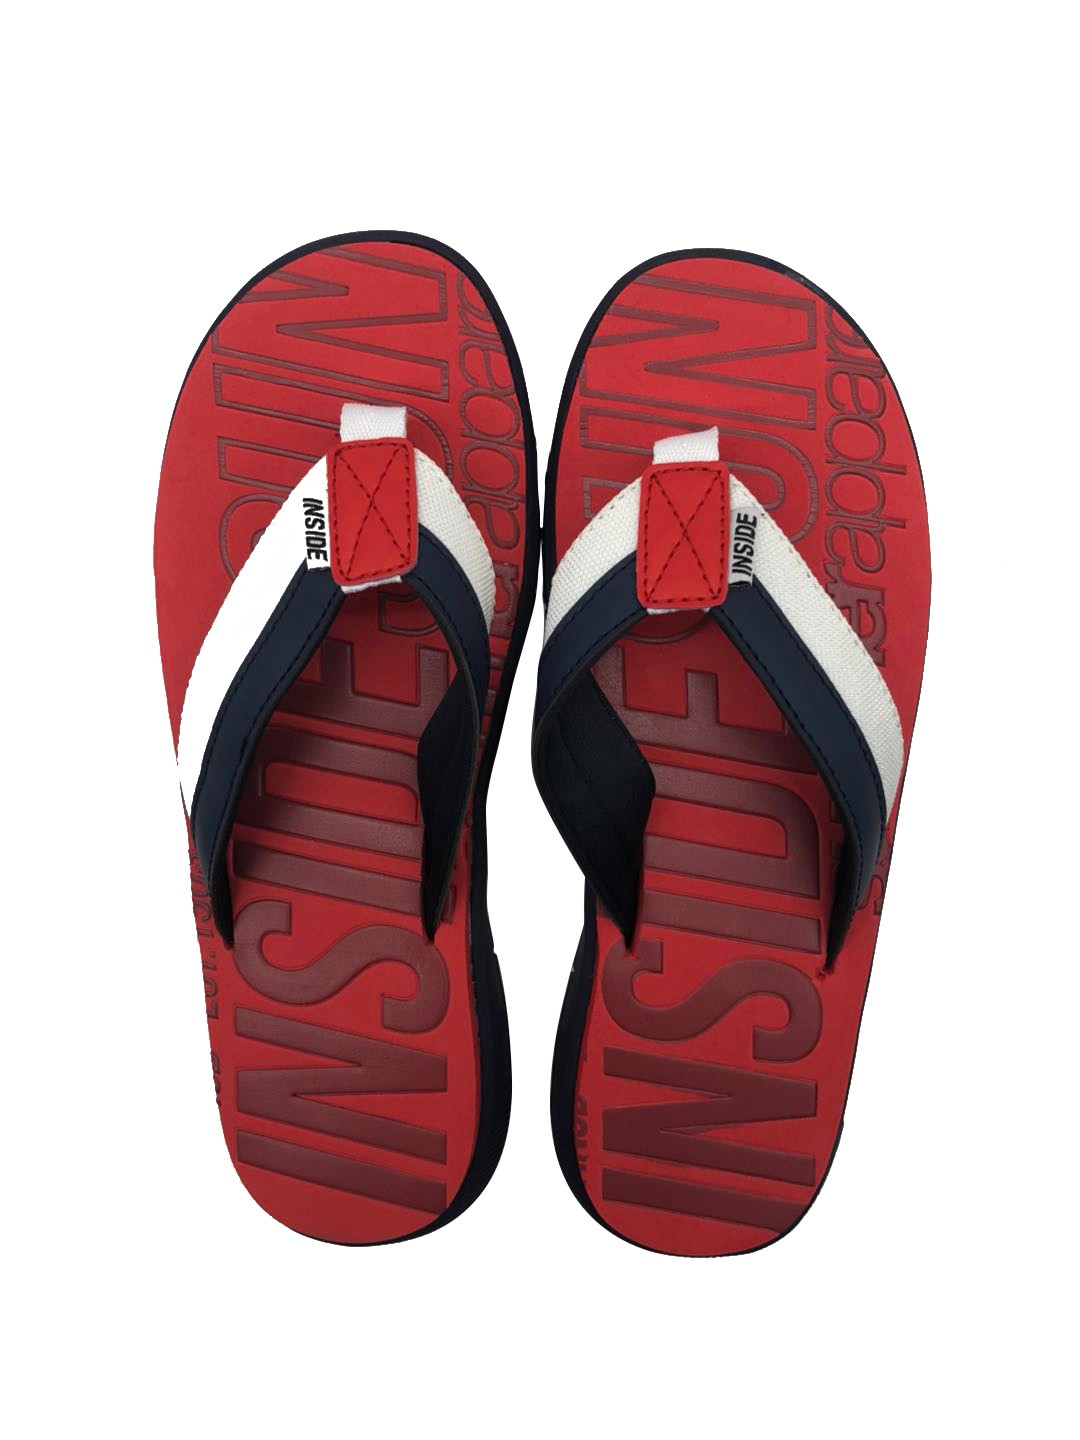 New Design Men's EVA PU Beach Sandals Flip Flops Manufacturers, New Design Men's EVA PU Beach Sandals Flip Flops Factory, Supply New Design Men's EVA PU Beach Sandals Flip Flops